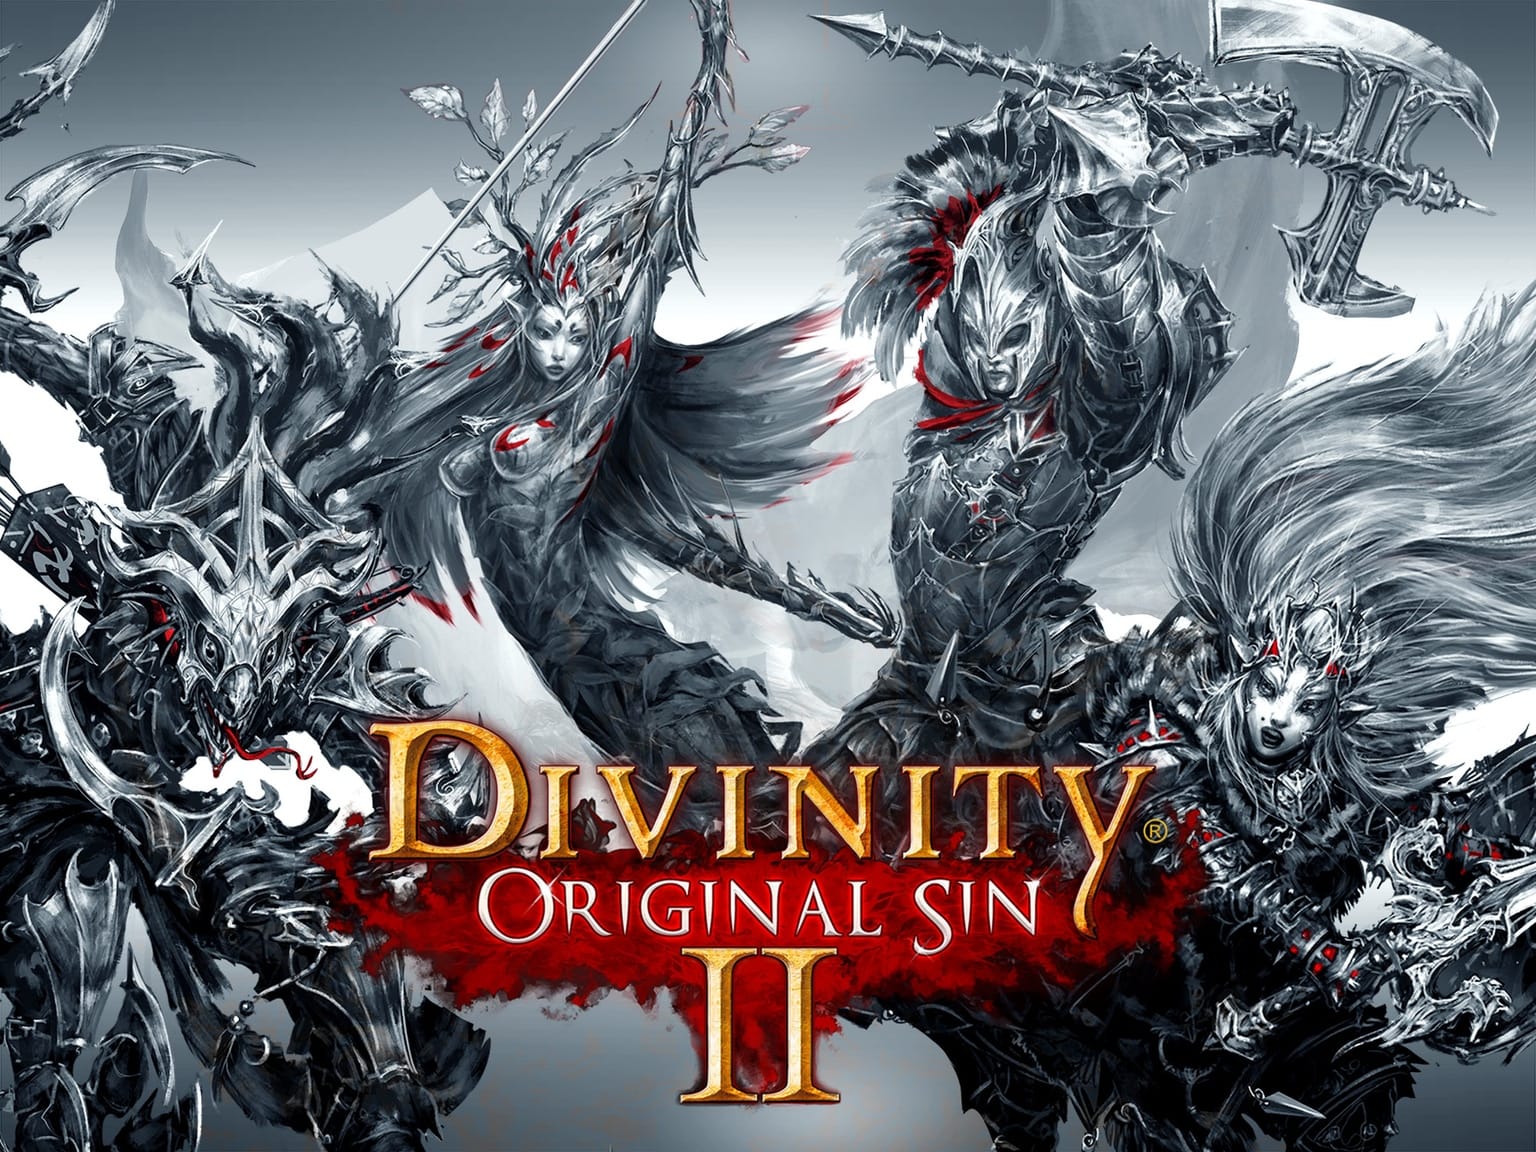 Divinity Original Sin 2 black friday deals